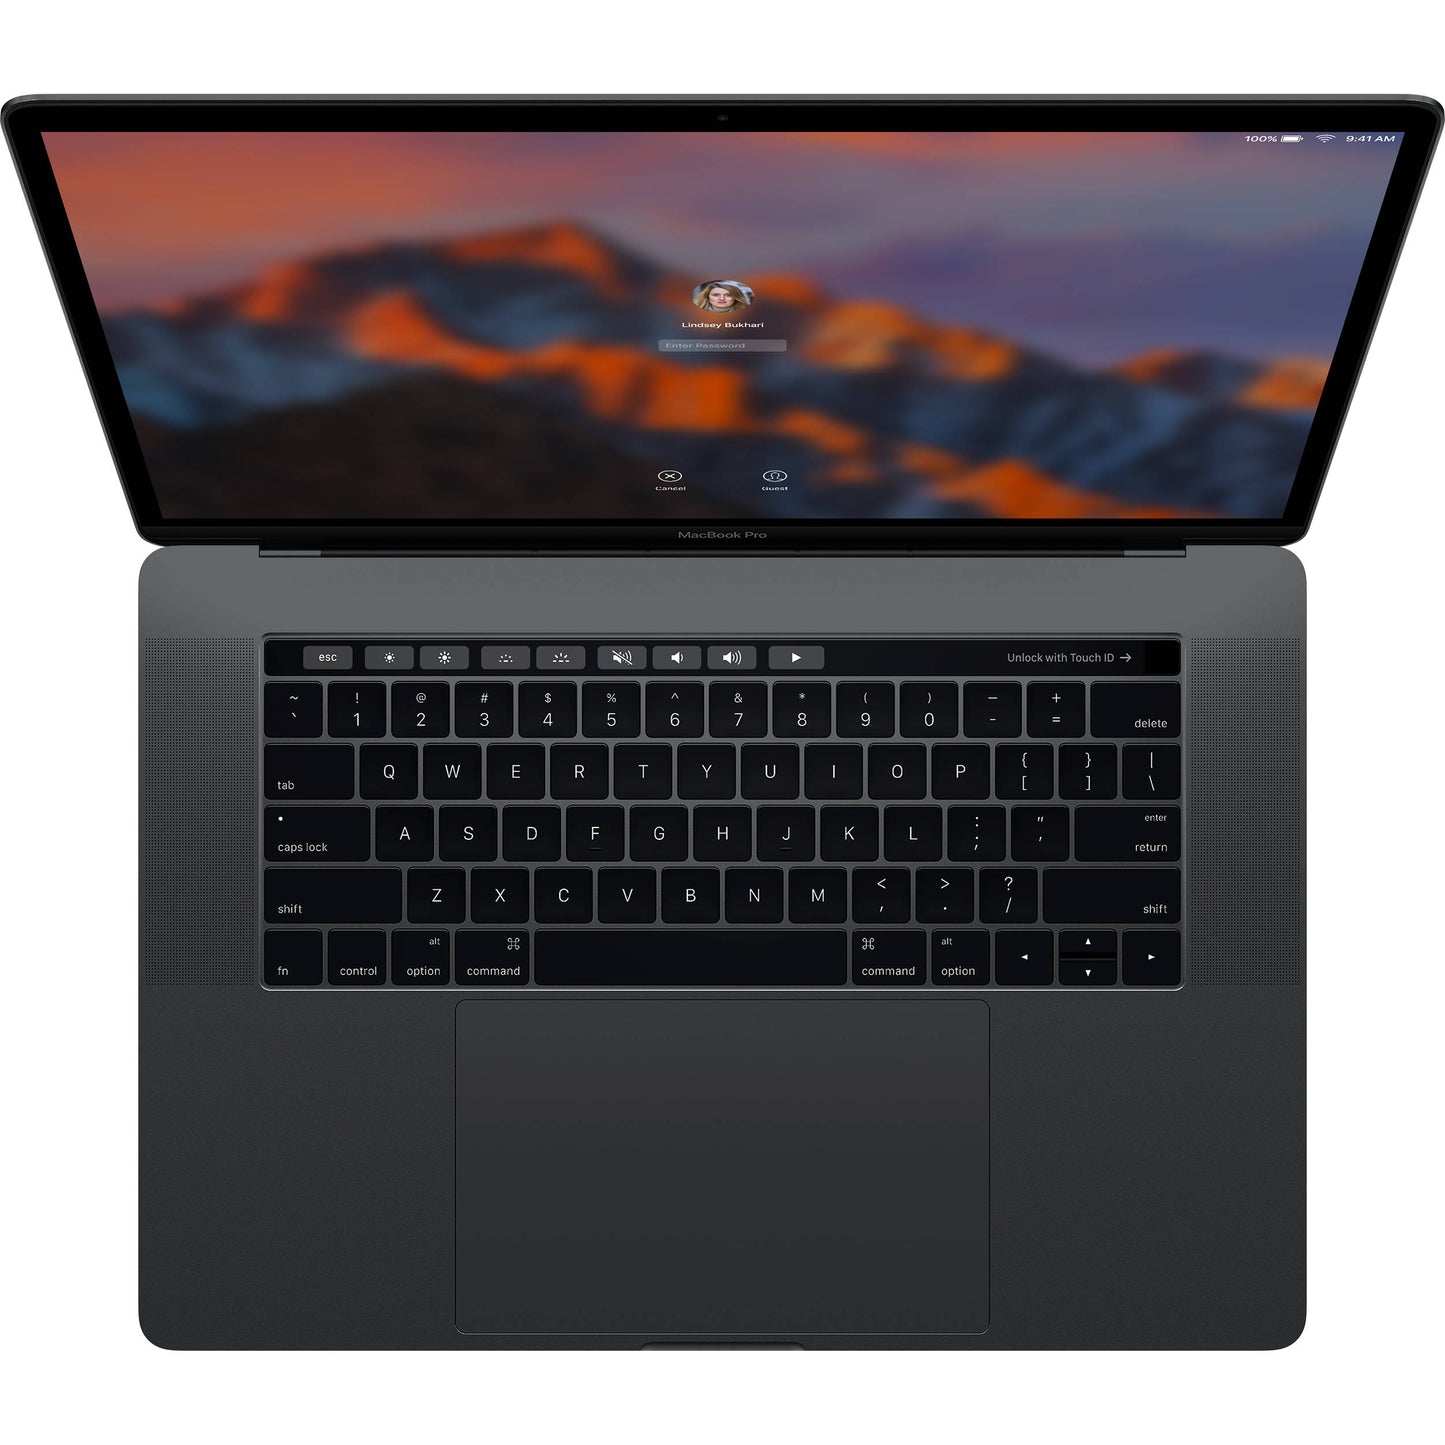 apple-mid-2017-15.4-inch-macbook-pro-touchbar-a1707-silver-qci7 - 3.1ghz processor, 16gb ram, pro 560 - 4gb gpu-mptv2ll/a-2